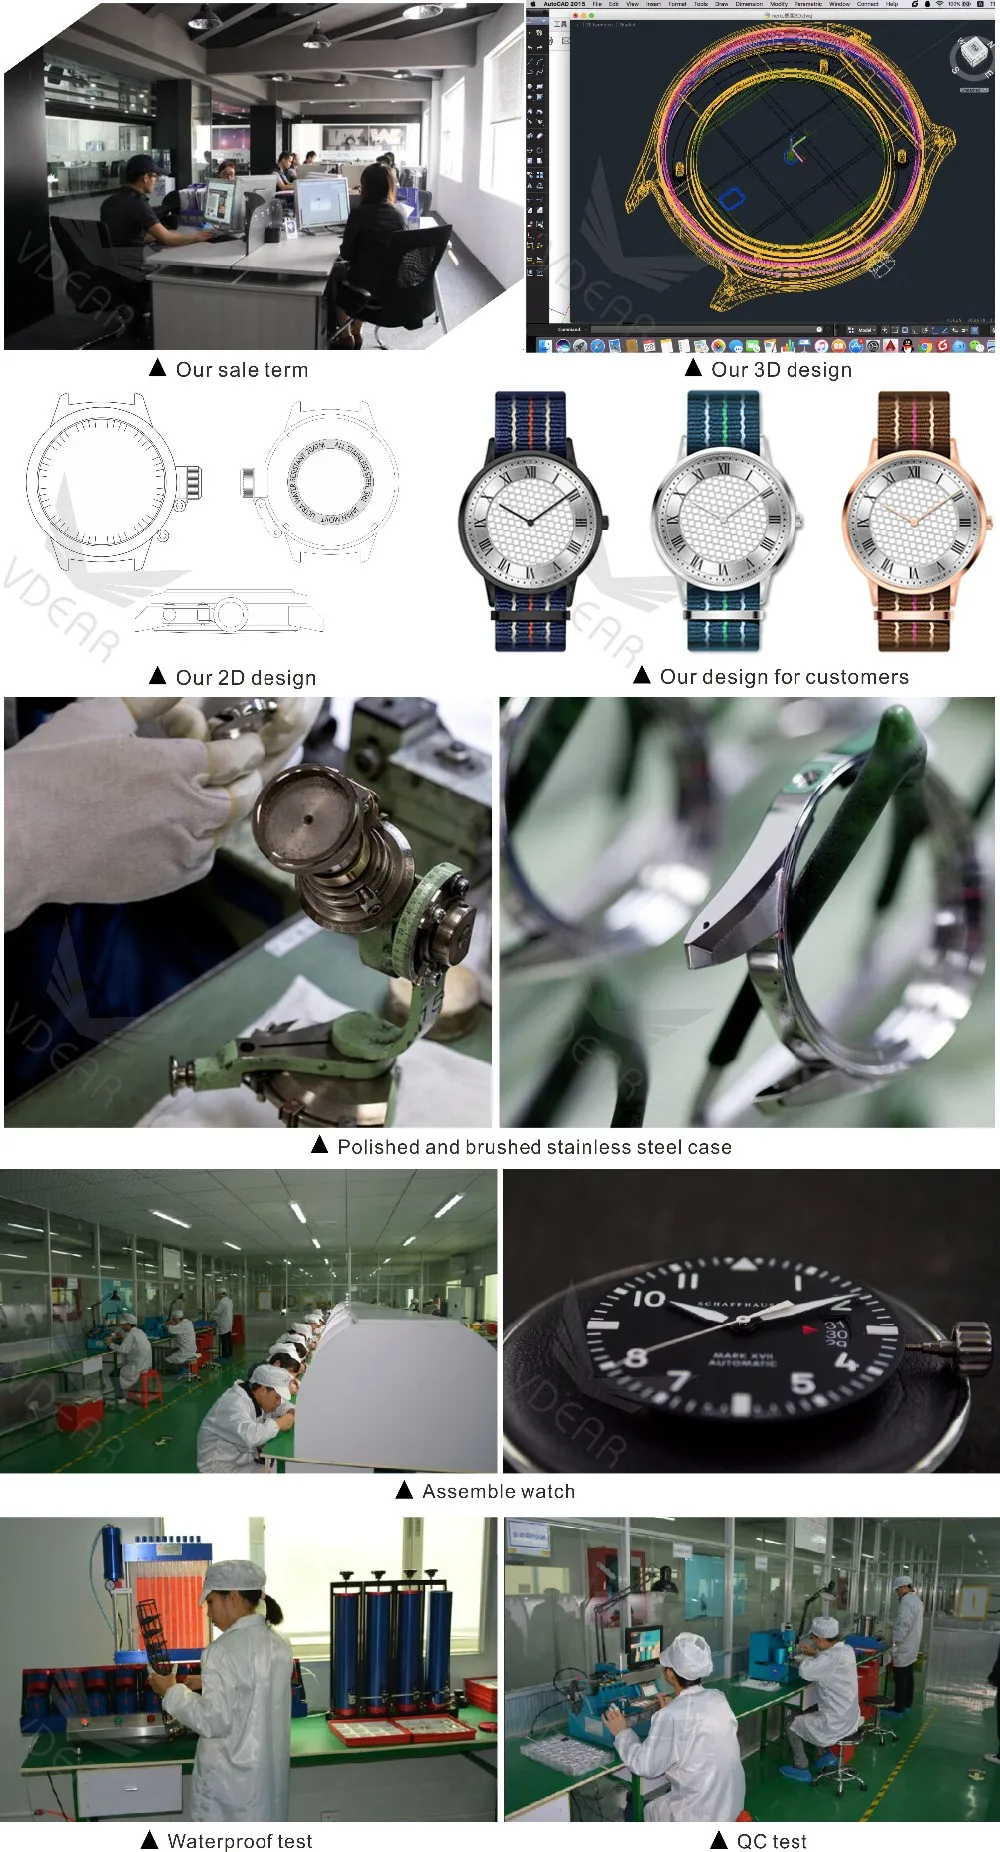 Stainless steel chain custom your own brand design watch low moq fashion quartz watch